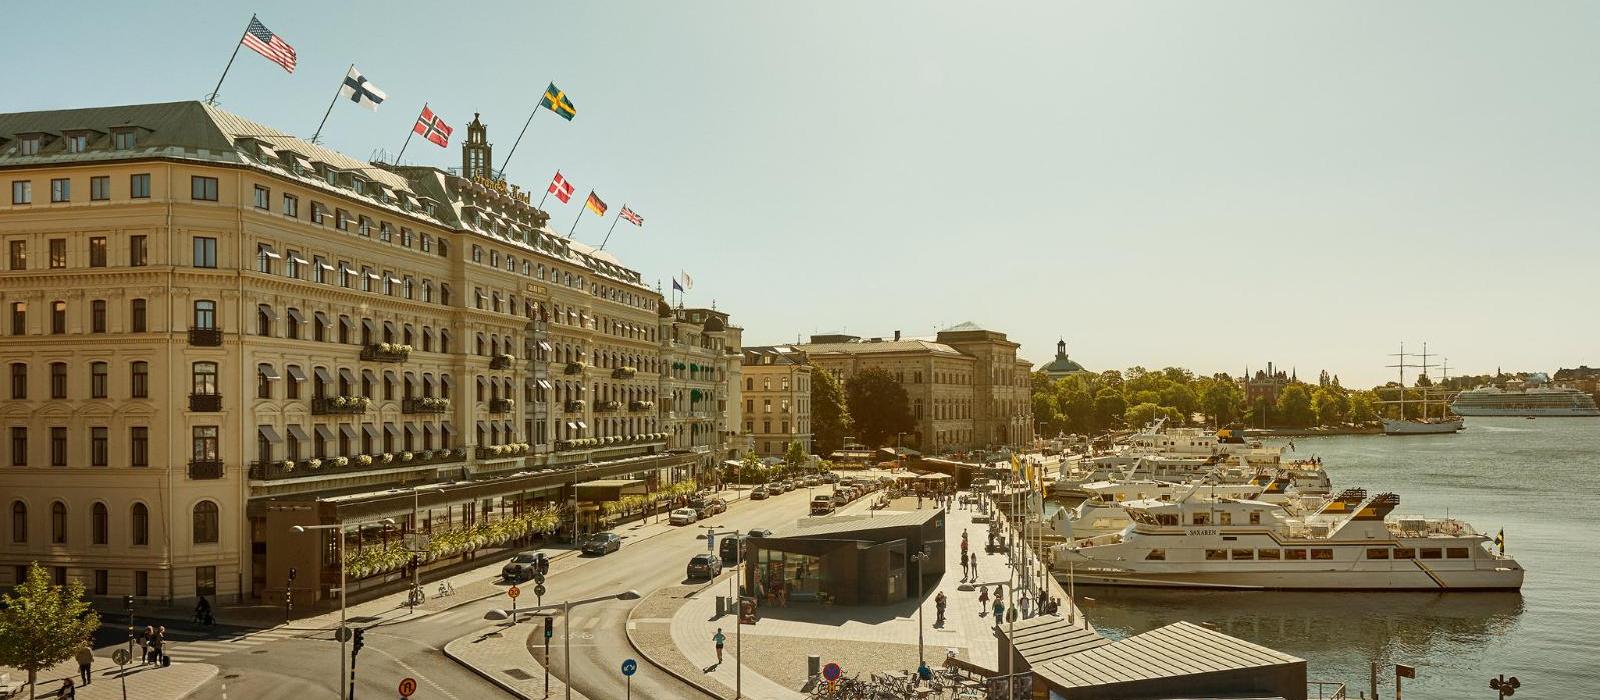 斯德哥尔摩大酒店(Grand Hotel Stockholm) 图片  www.lhw.cn